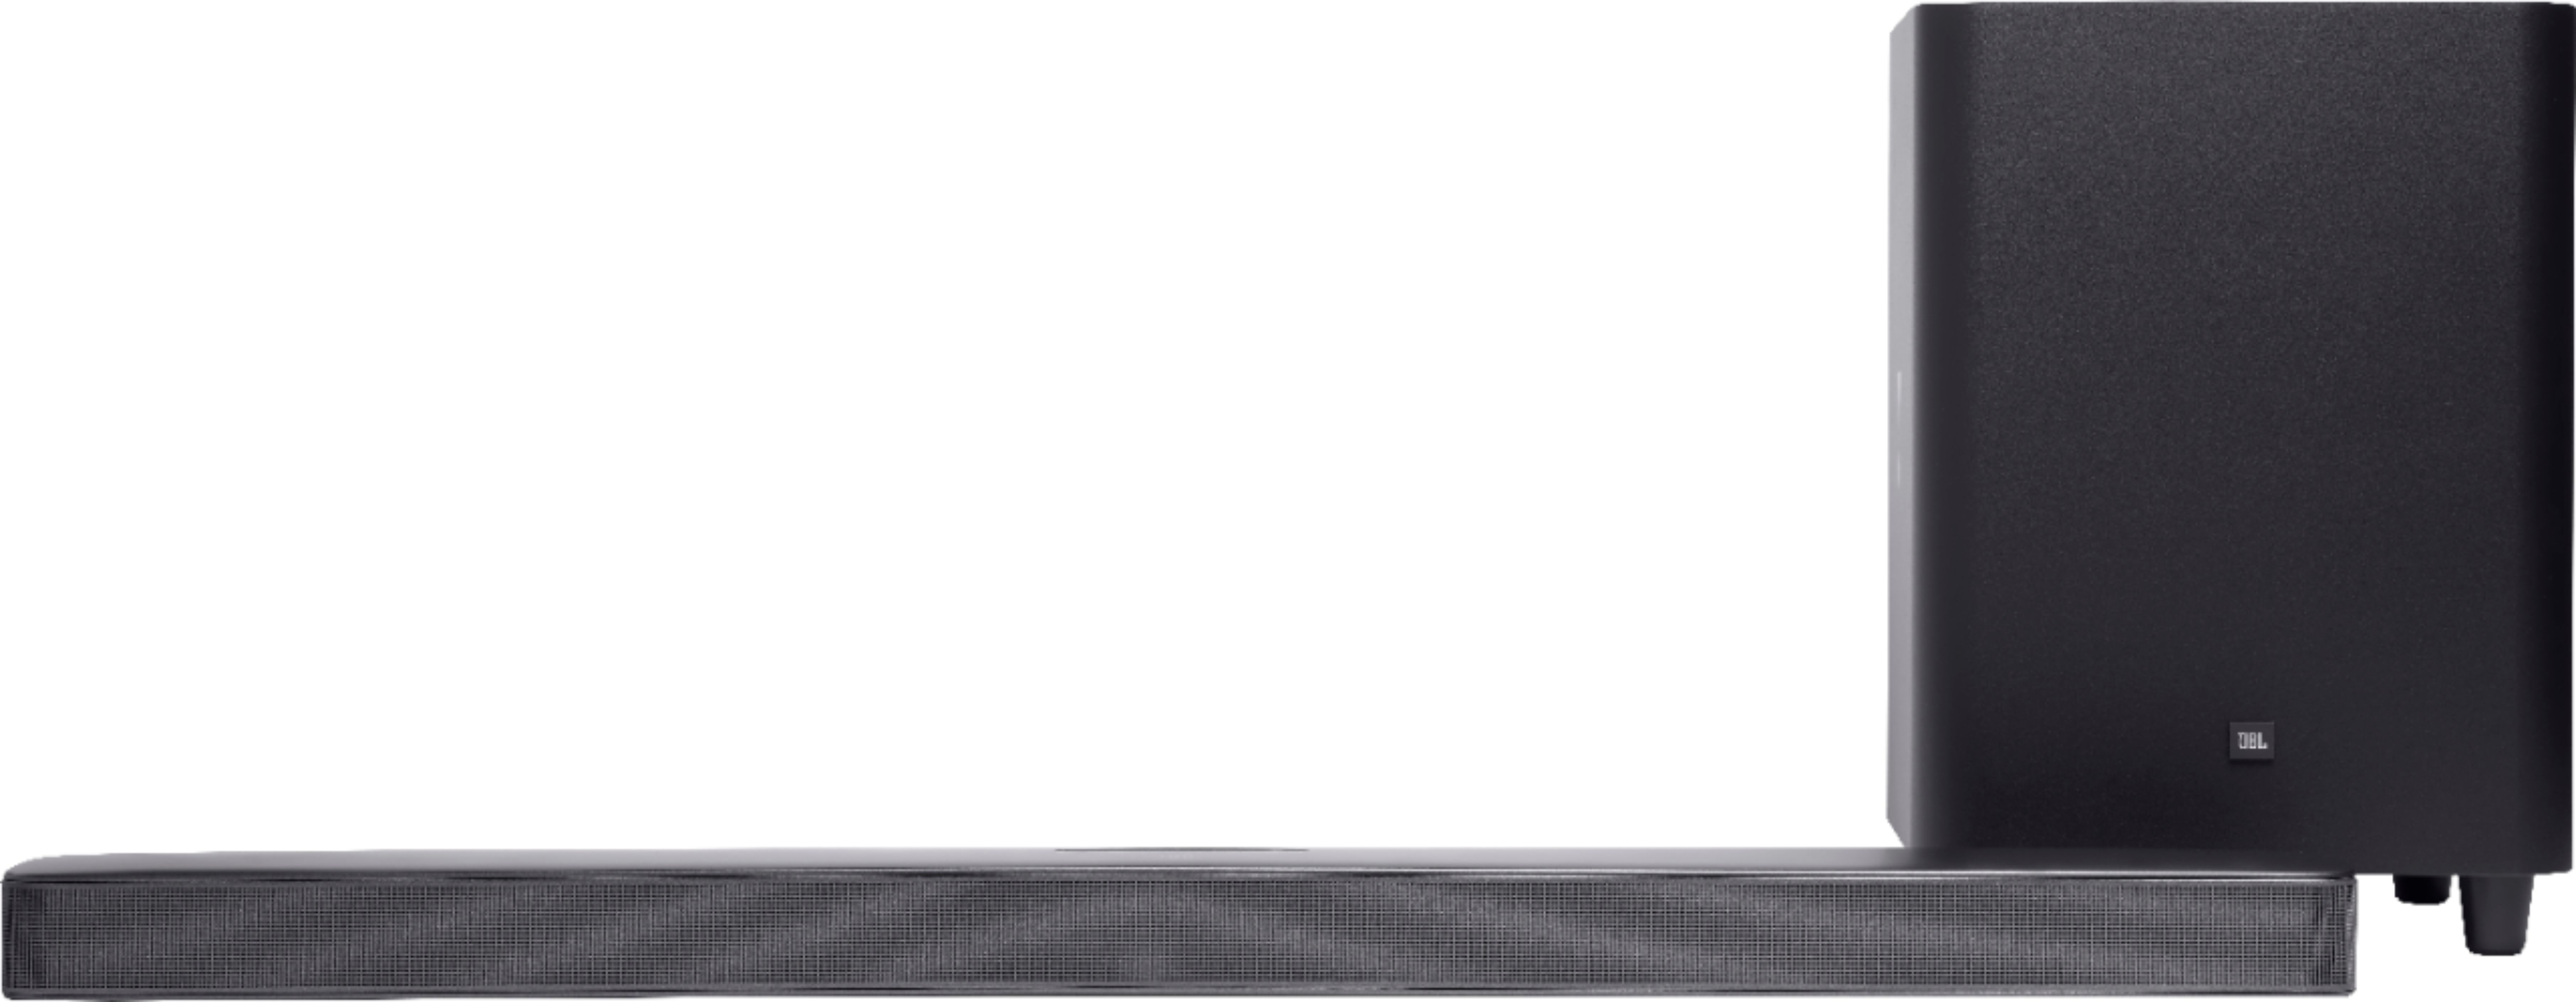 JBL 5.1-Channel Soundbar with Wireless Subwoofer Black JBL2GBAR51IMBLKAM Best Buy